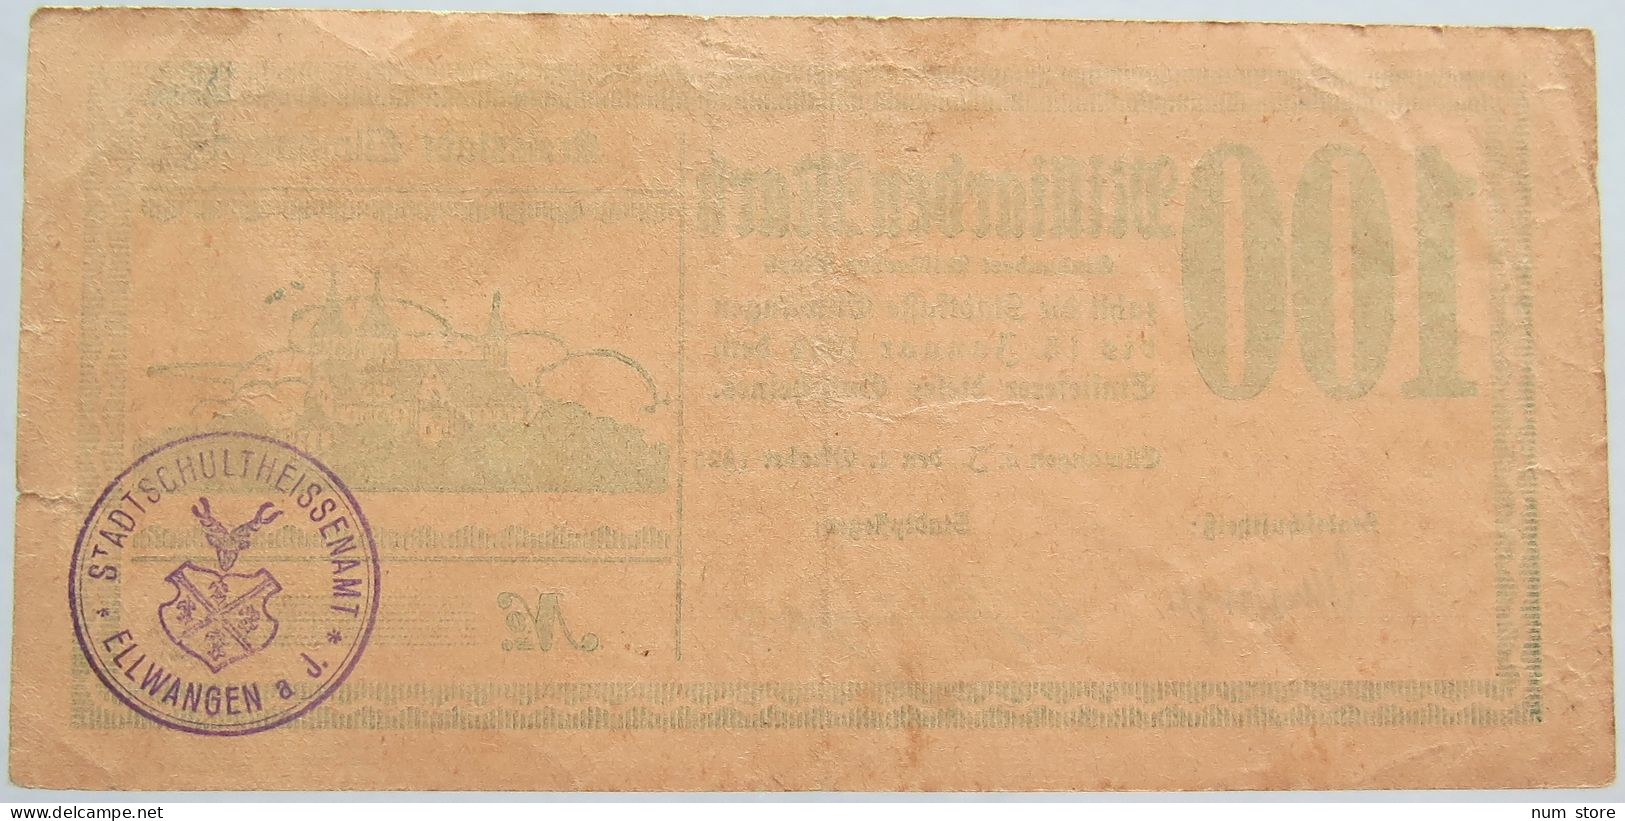 GERMANY 100 MILLIARDEN MARK 1923 ELLWANGEN #alb002 0287 - 100 Miljard Mark